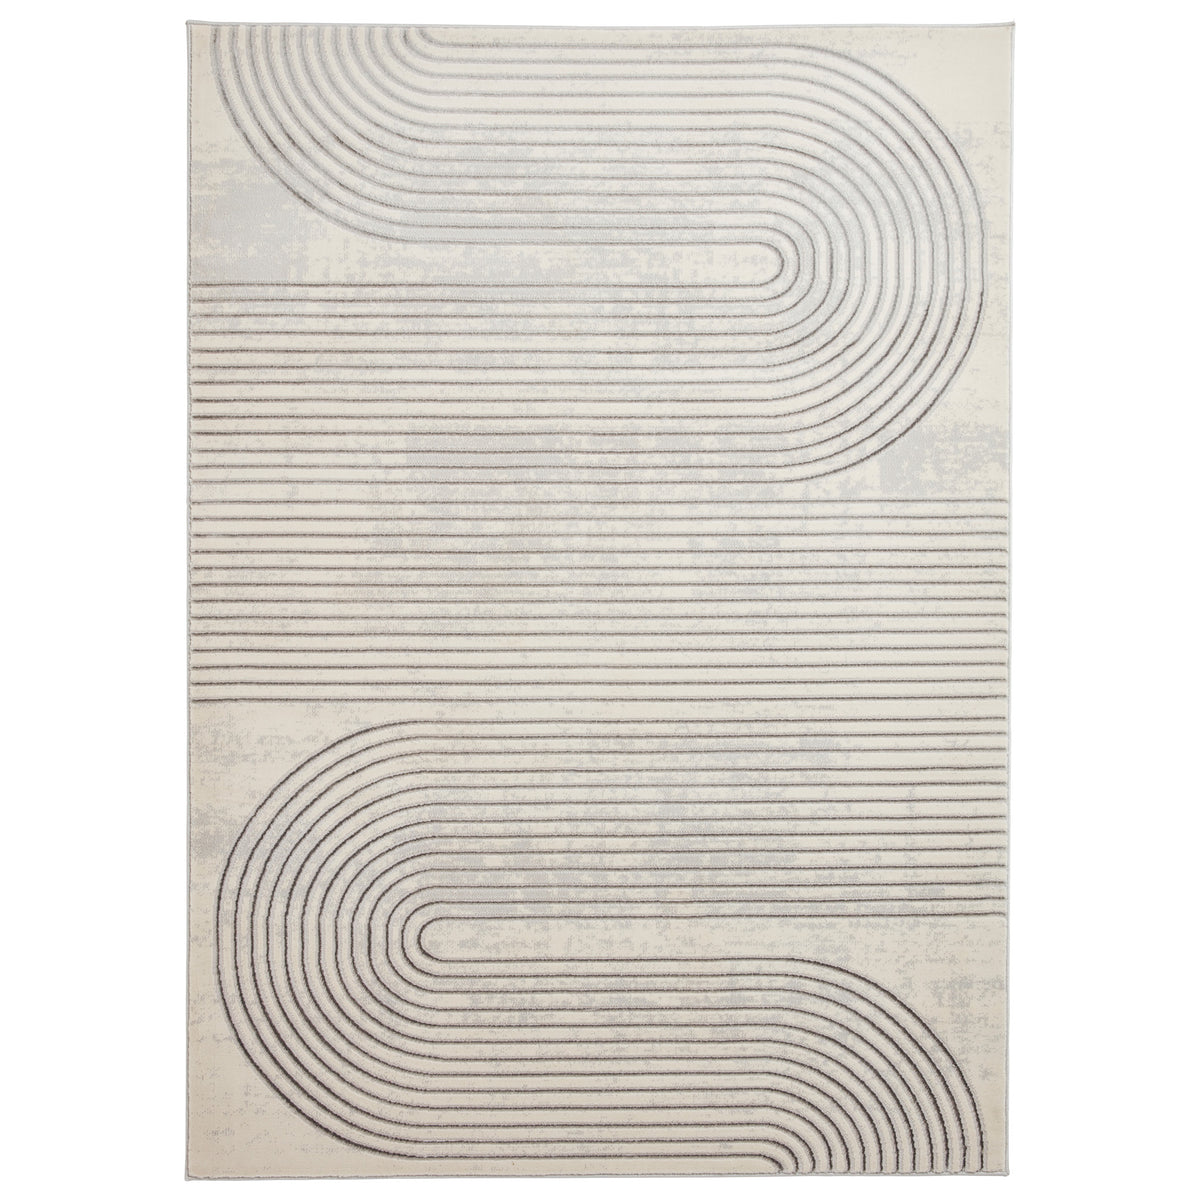 Aldrin Grey Ivory Swirl Patterned Rug from Roseland furniture